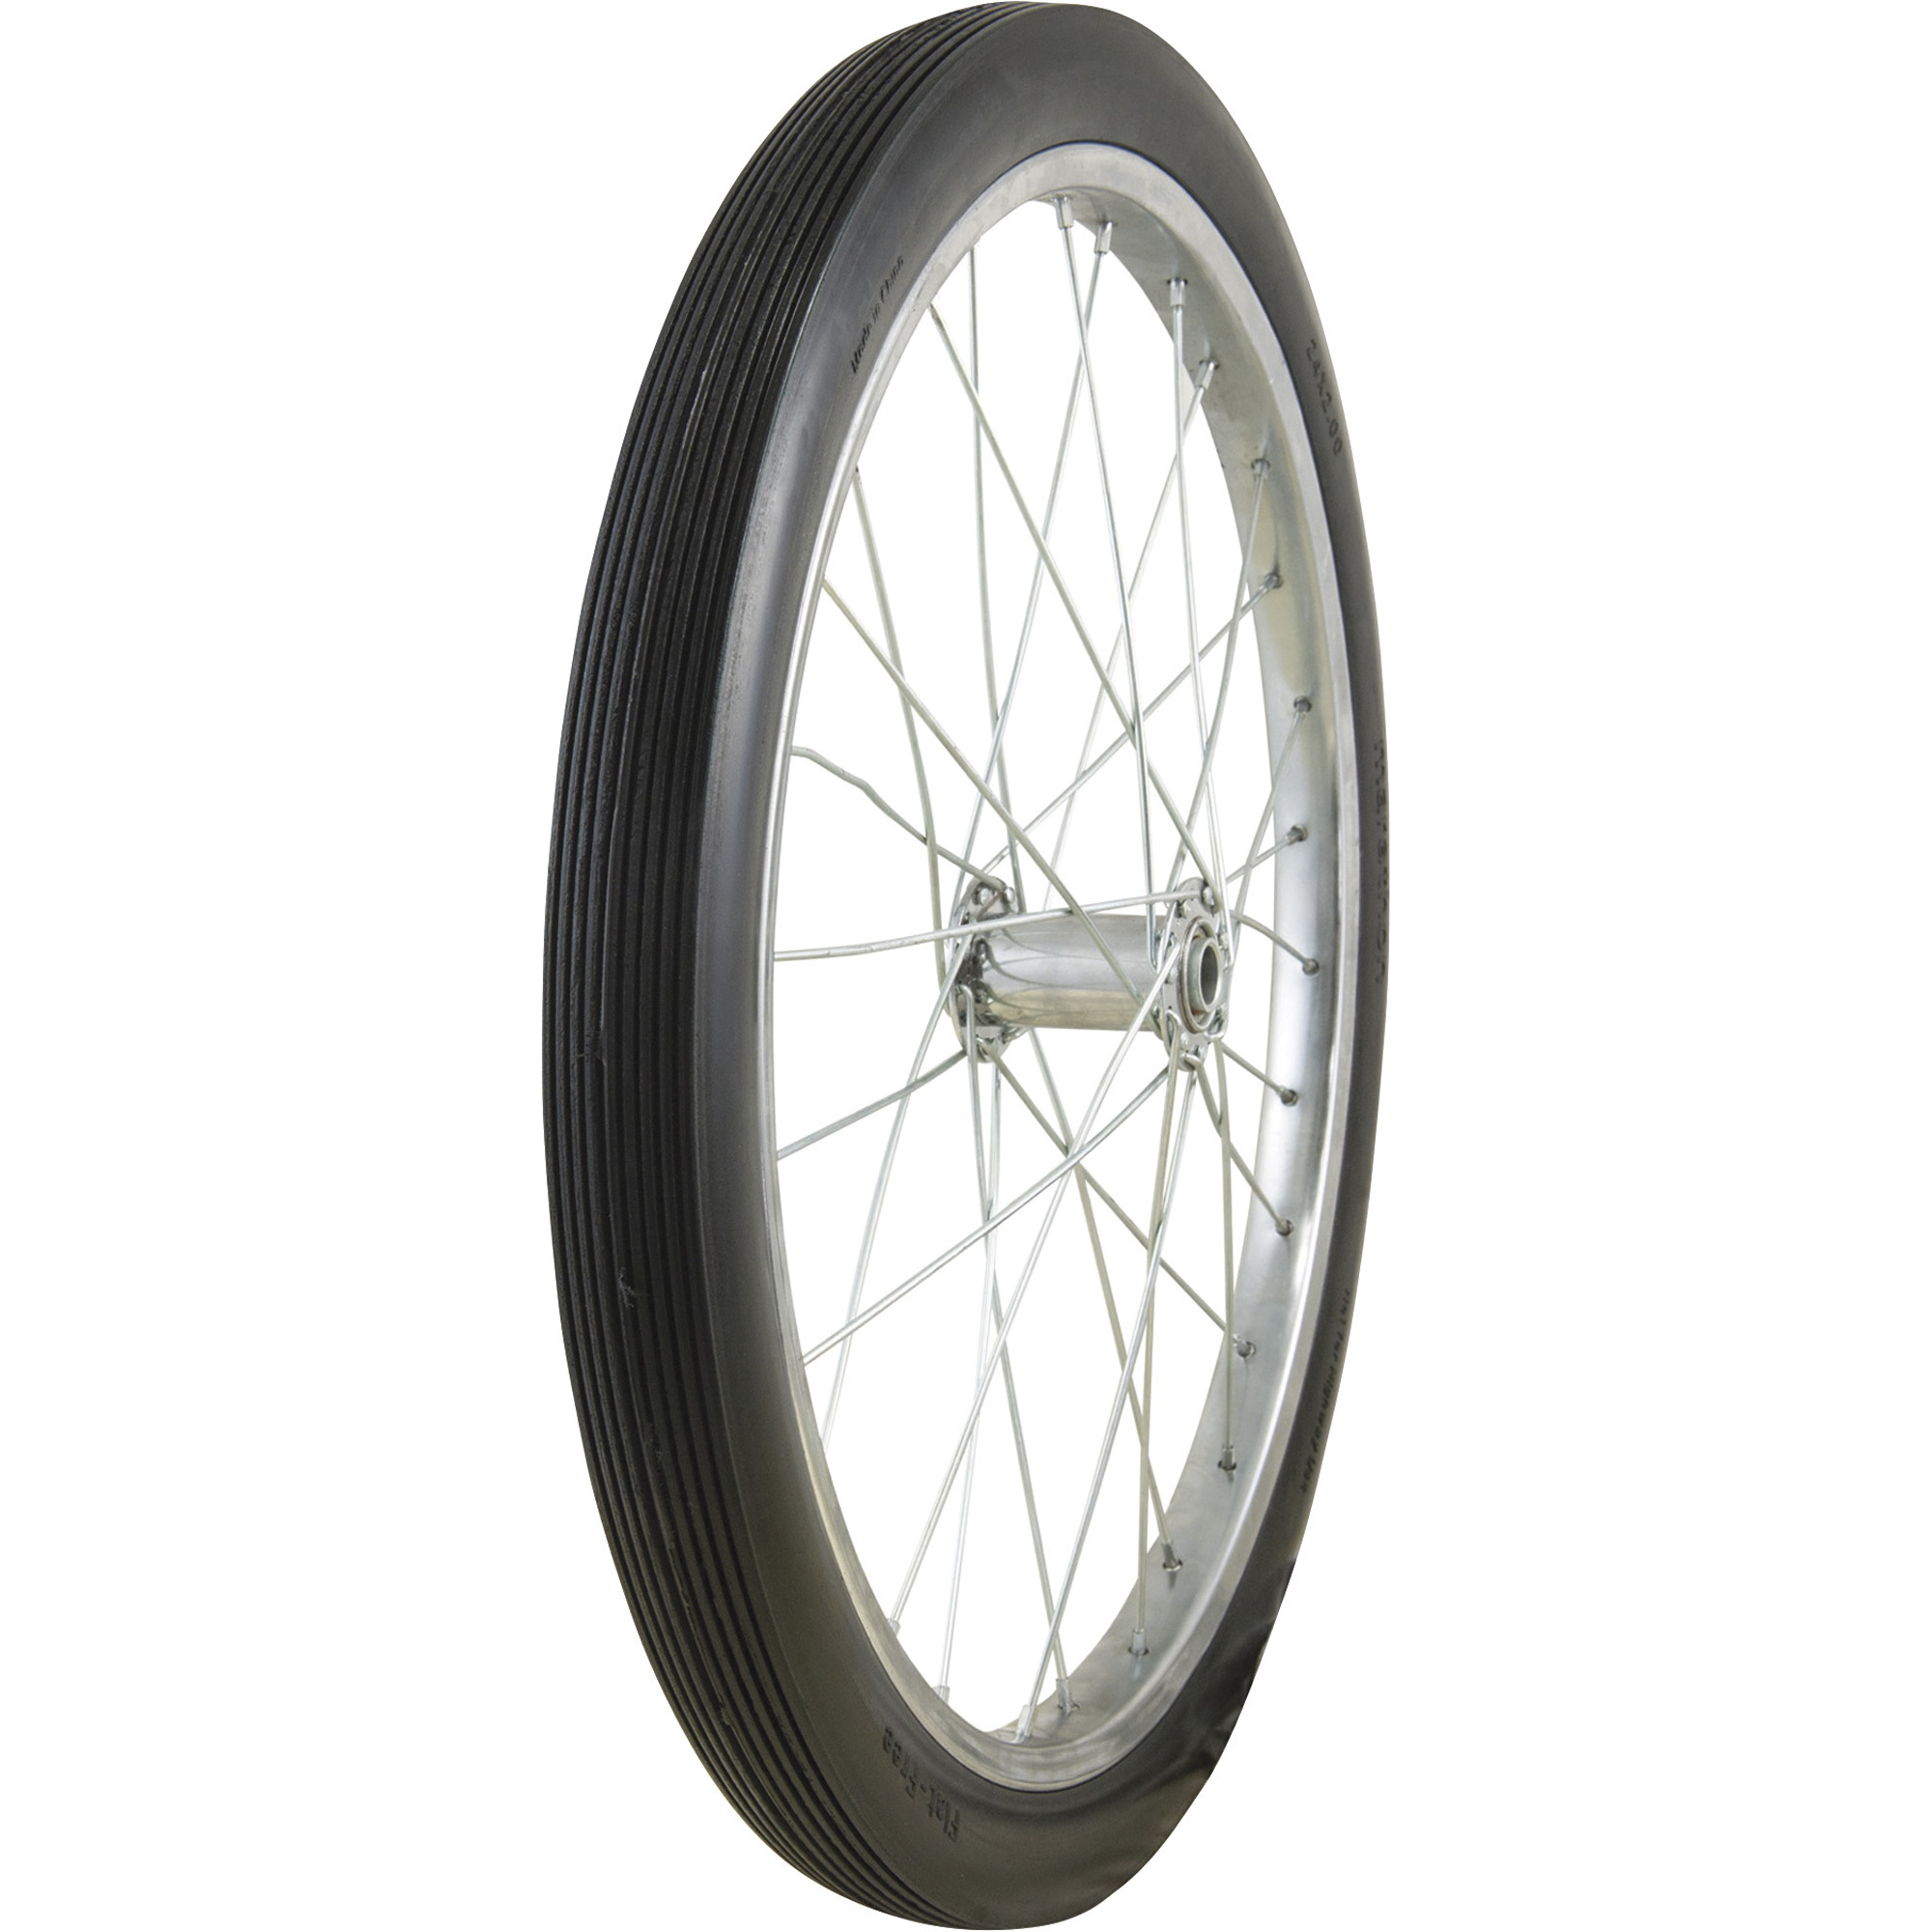 Marathon Tires Flat-Free Tire on Steel Spoke Rim â 3/4Inch Bore, 26 x 2.125Inch